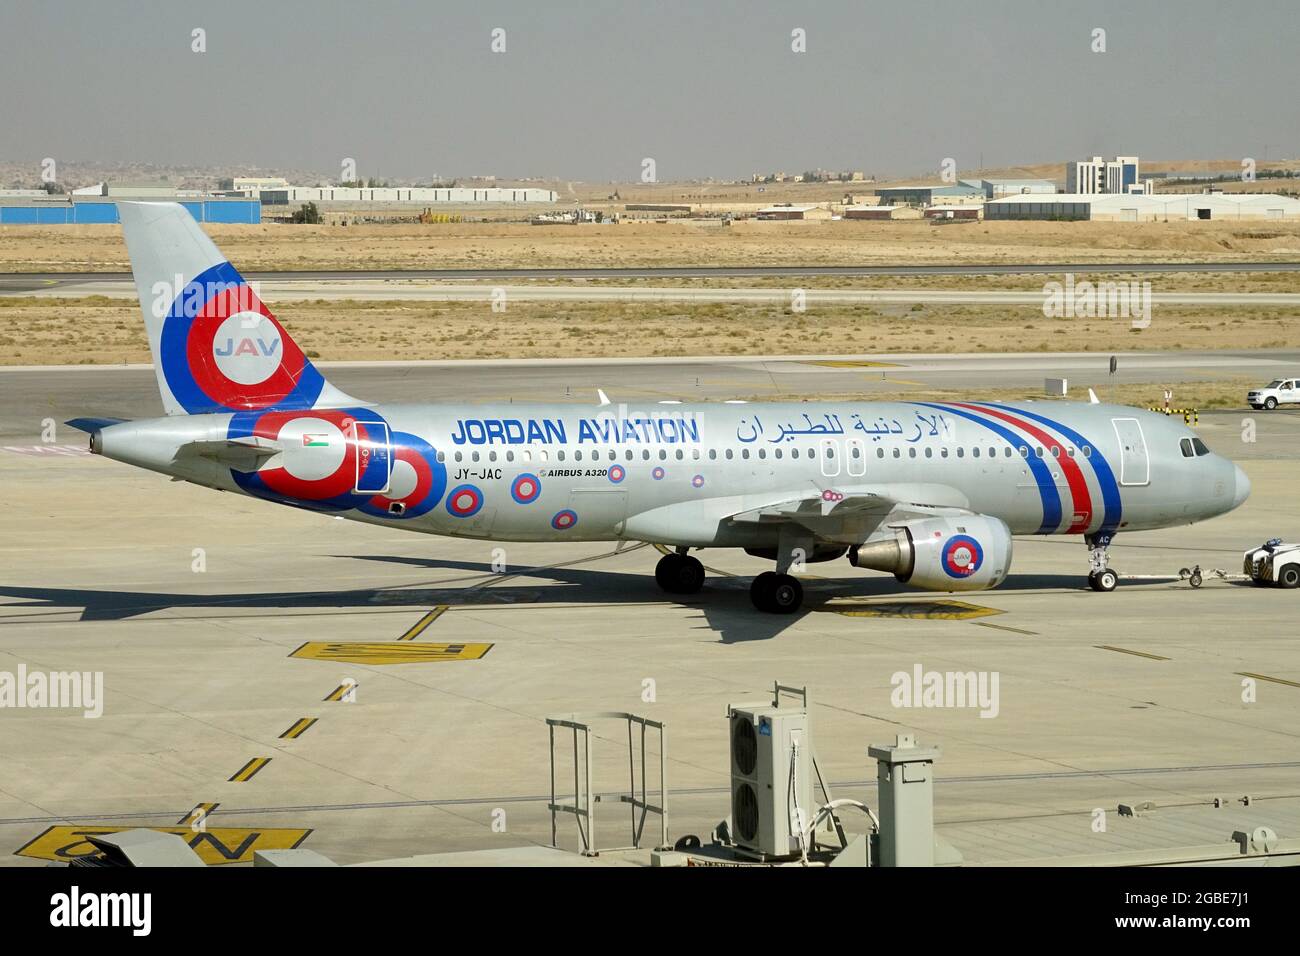 Jordan Aviation, Airbus A320 airplane Stock Photo - Alamy